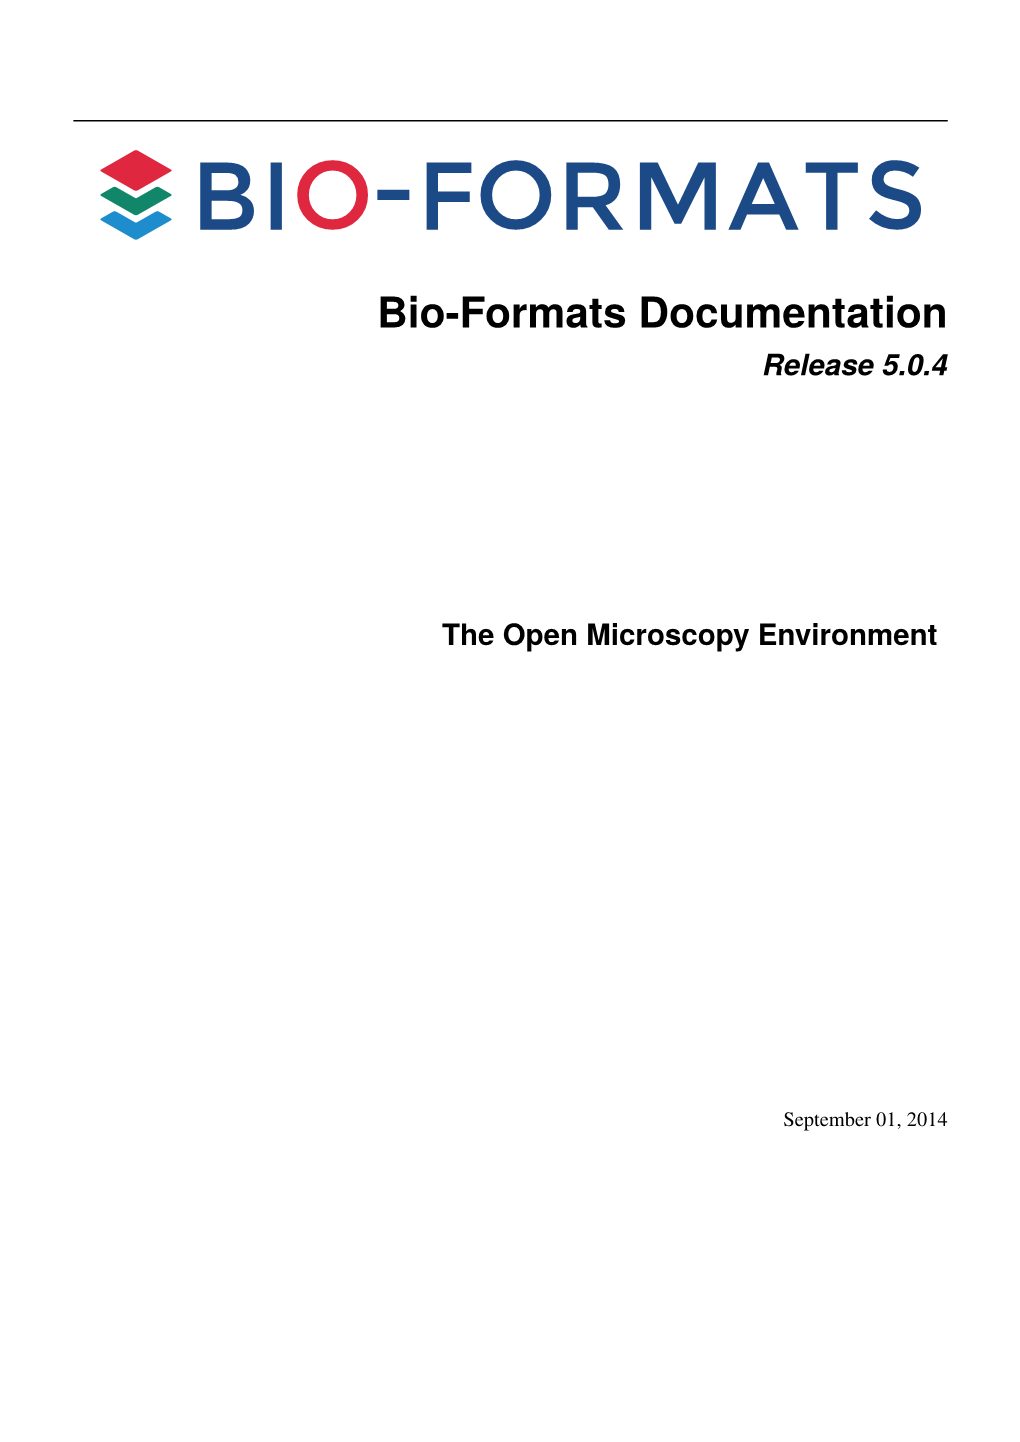 Bio-Formats Documentation Release 5.0.4